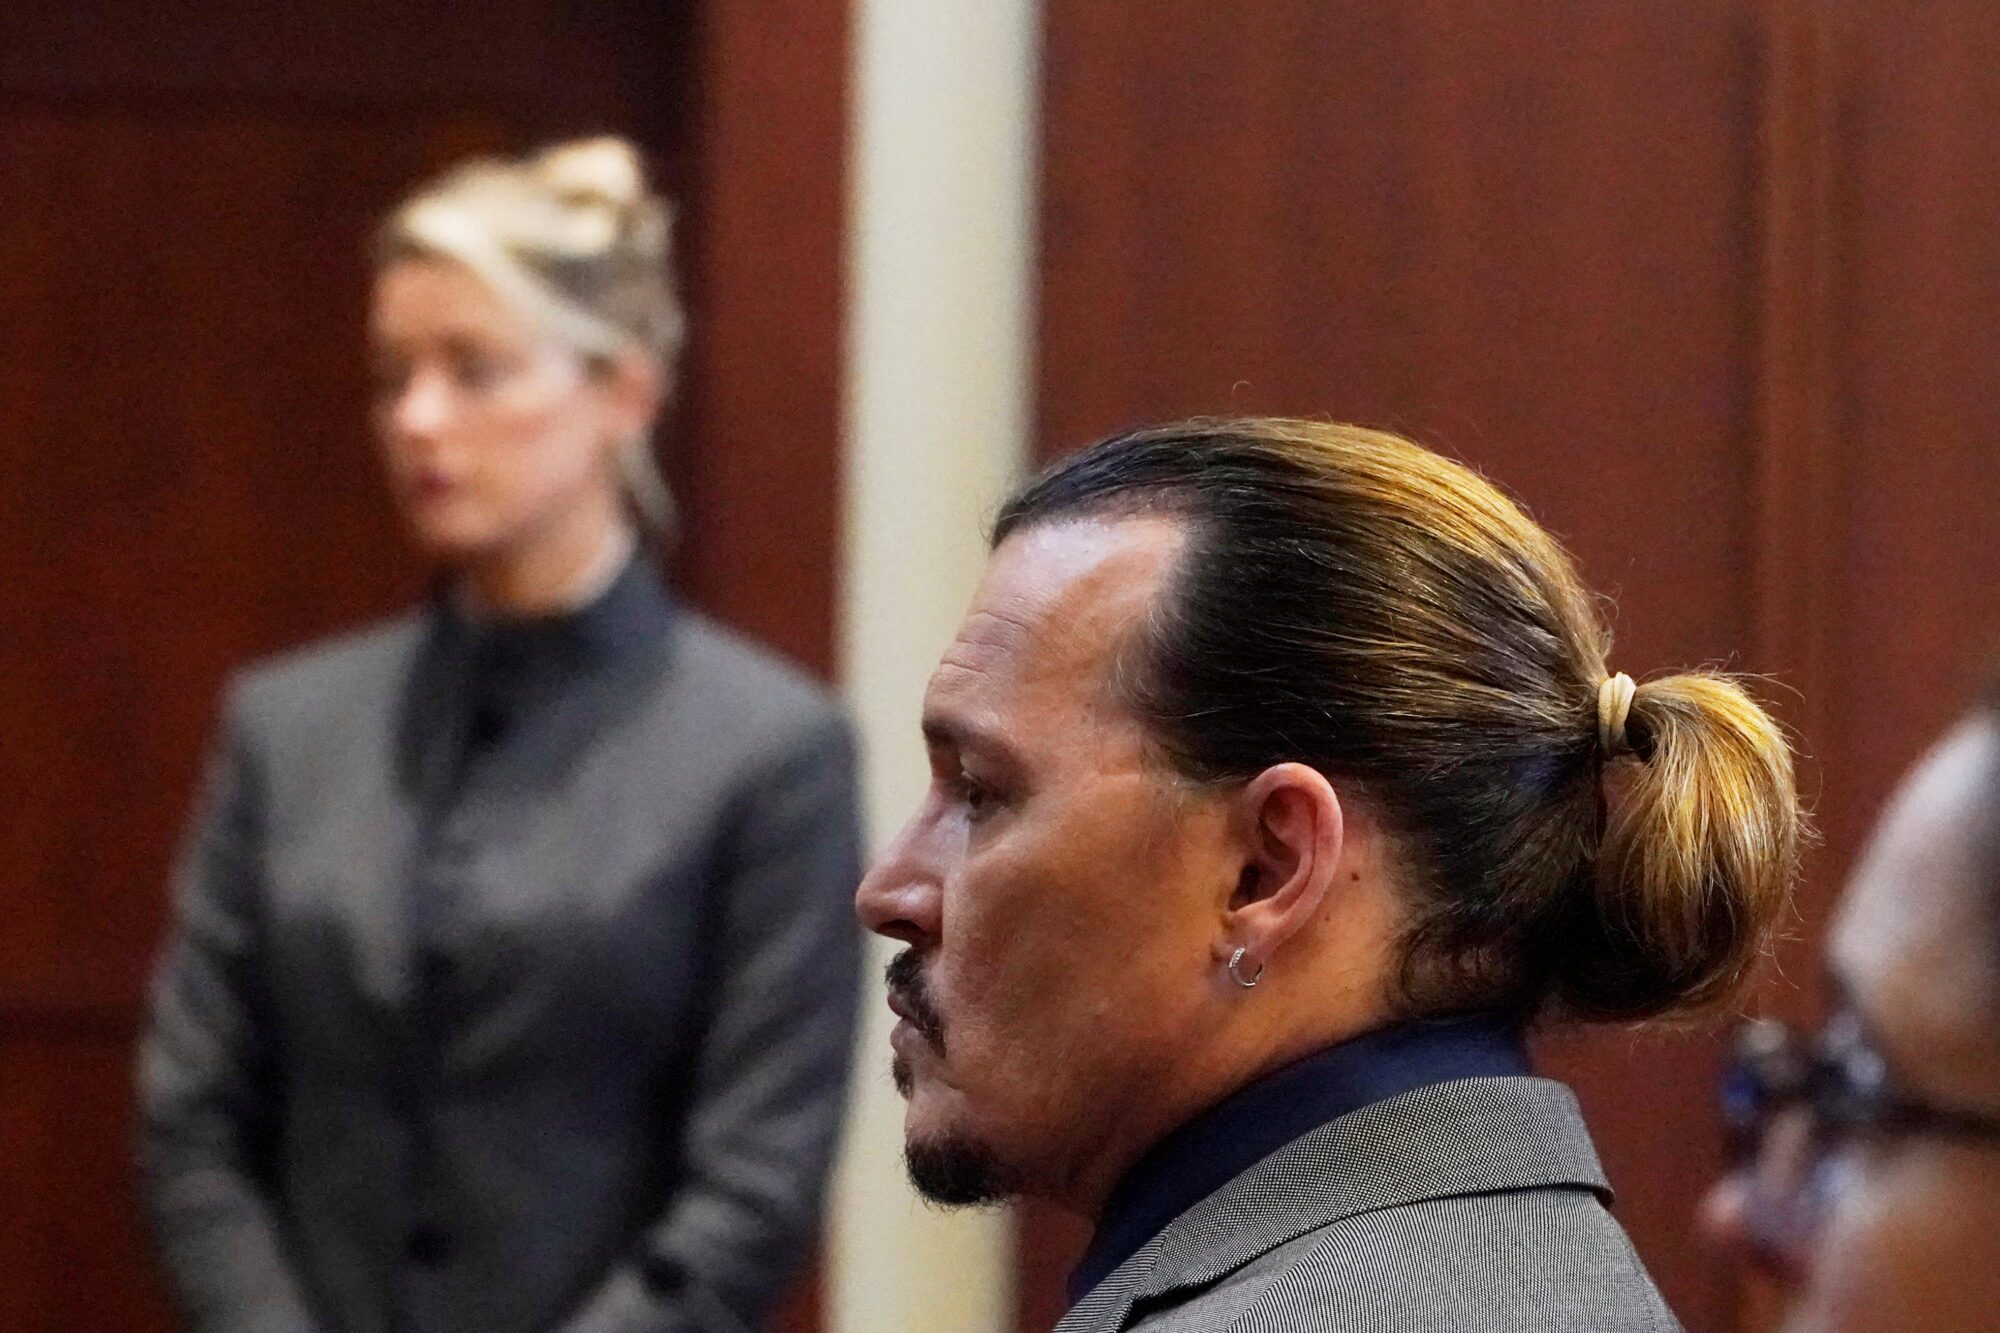 Johnny Depp defamation case against Amber Heard